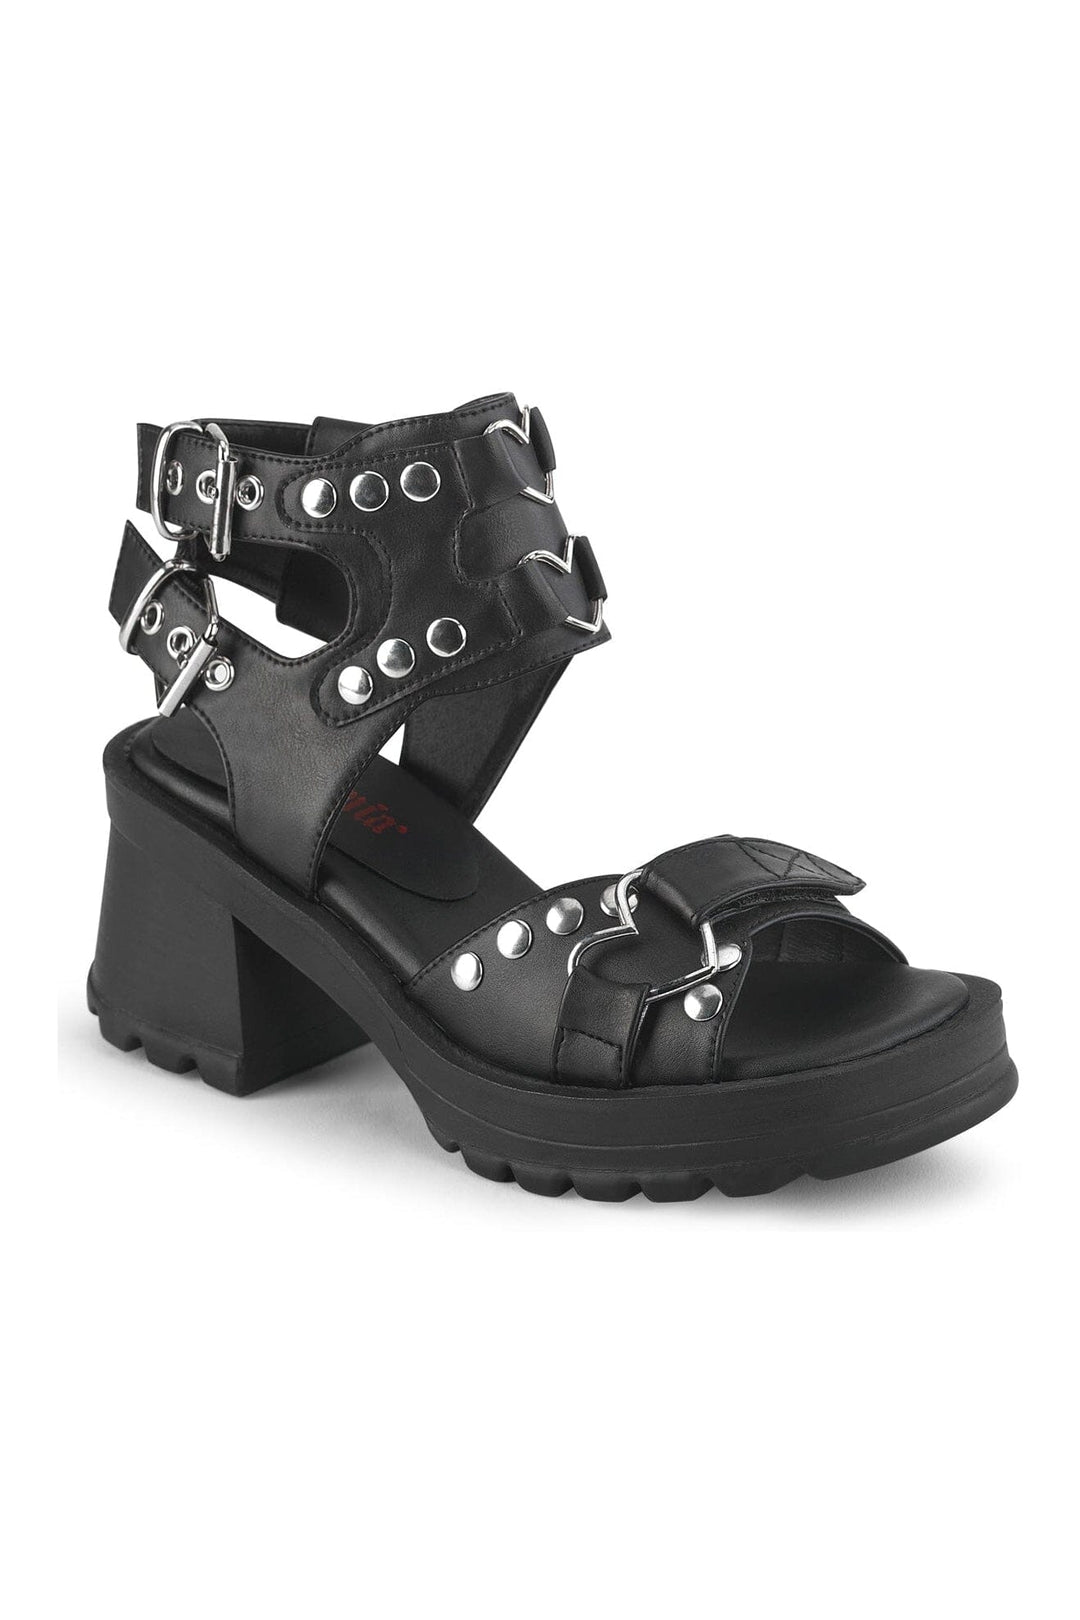 BRATTY-07 Black Vegan Leather Sandal-Sandals-Demonia-Black-10-Vegan Leather-SEXYSHOES.COM